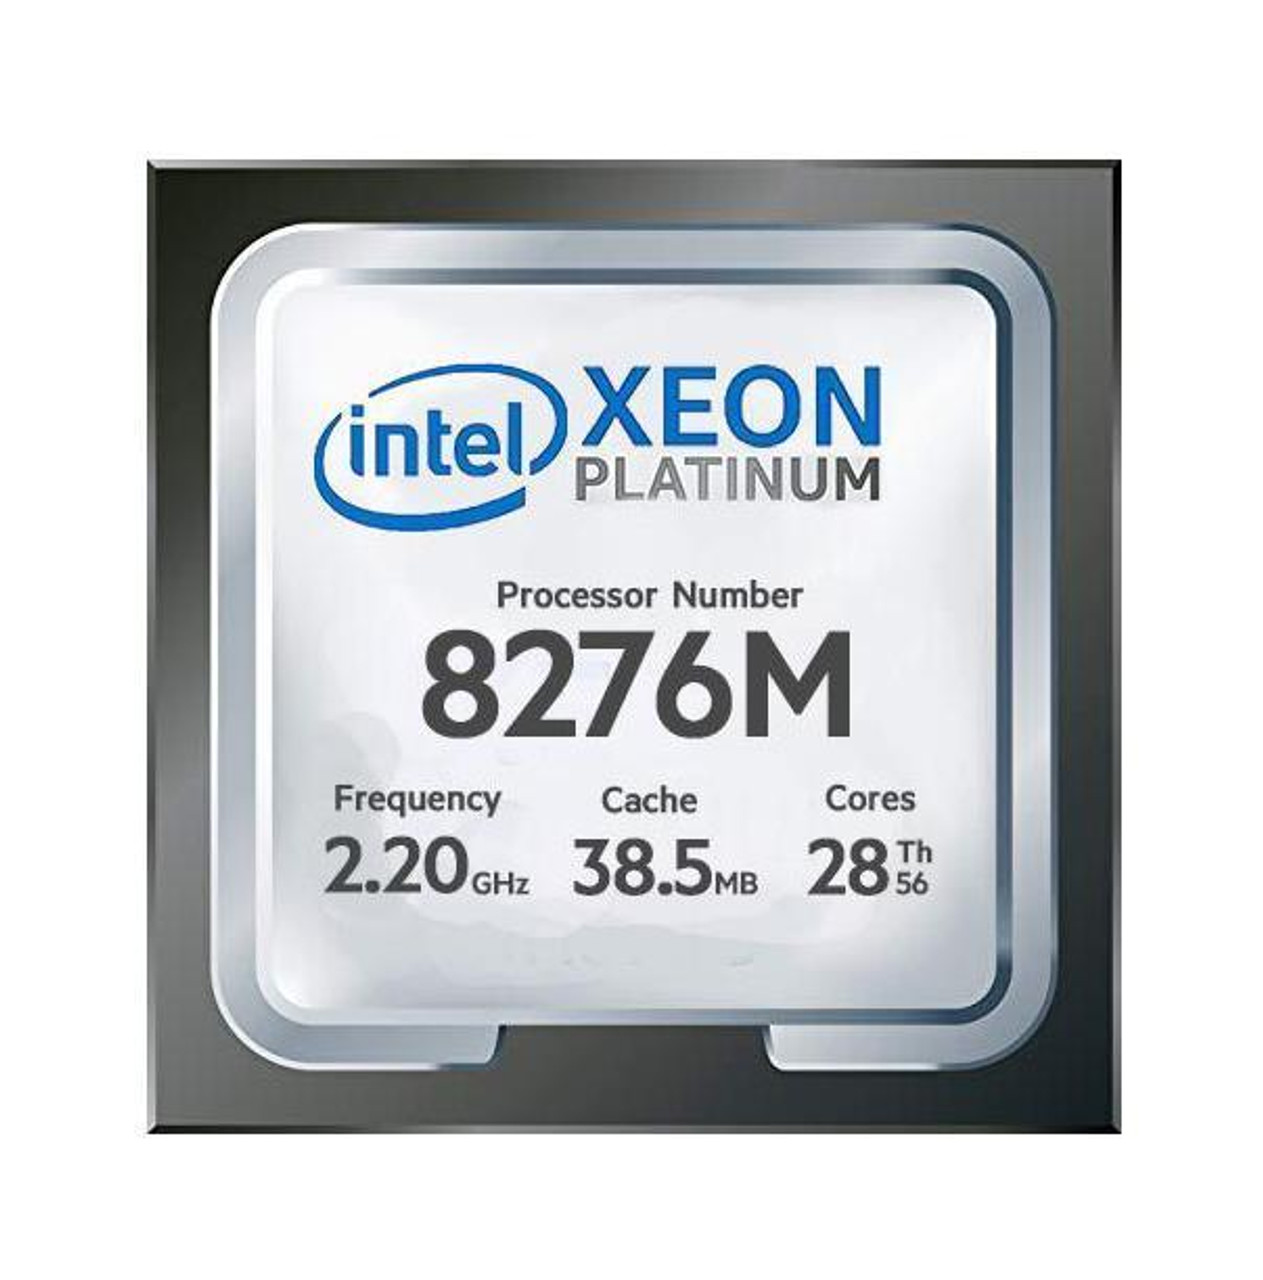 Dell CPU Kit Intel Xeon Platinum 28 Core Processor 8276m 2.20GHz 38.5mb Cache Tdp 165w Fclga3647 For Dell Precision 7920 Rack Workstation ( R7920 )